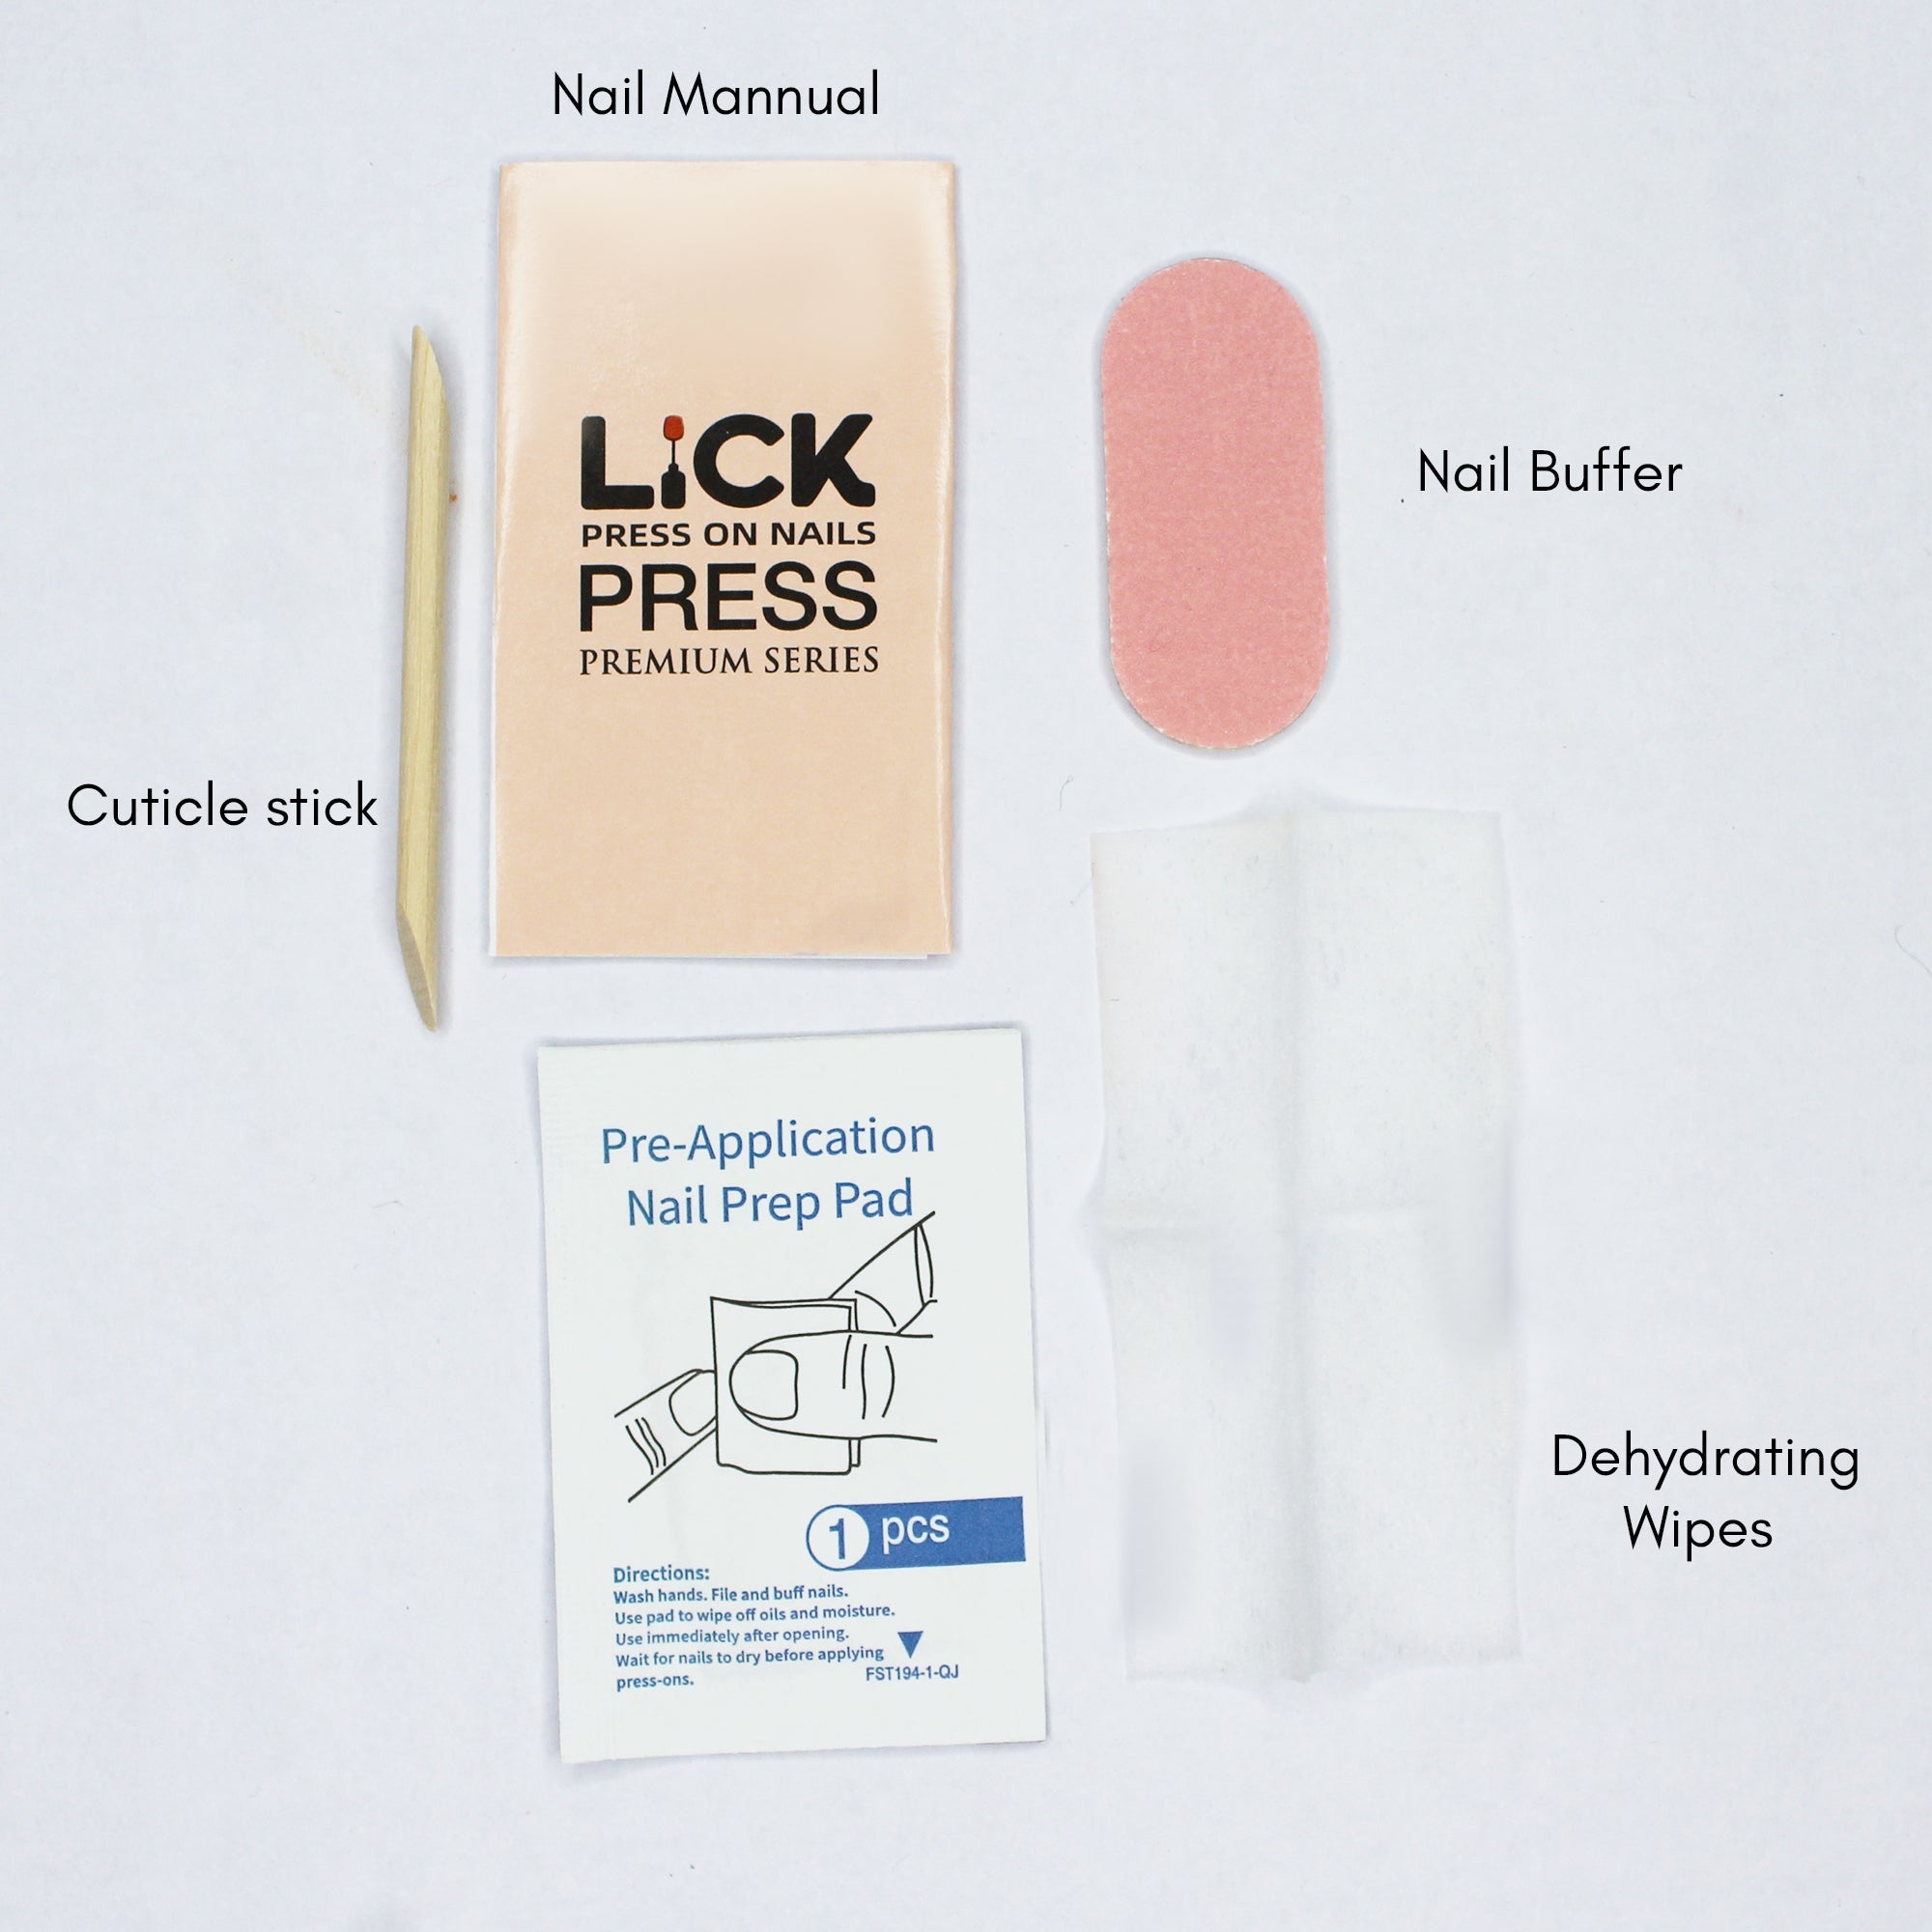 Lick Nail Matte Finish Navy Blue Square Shape Press On Nails Pack Of 24 Pcs